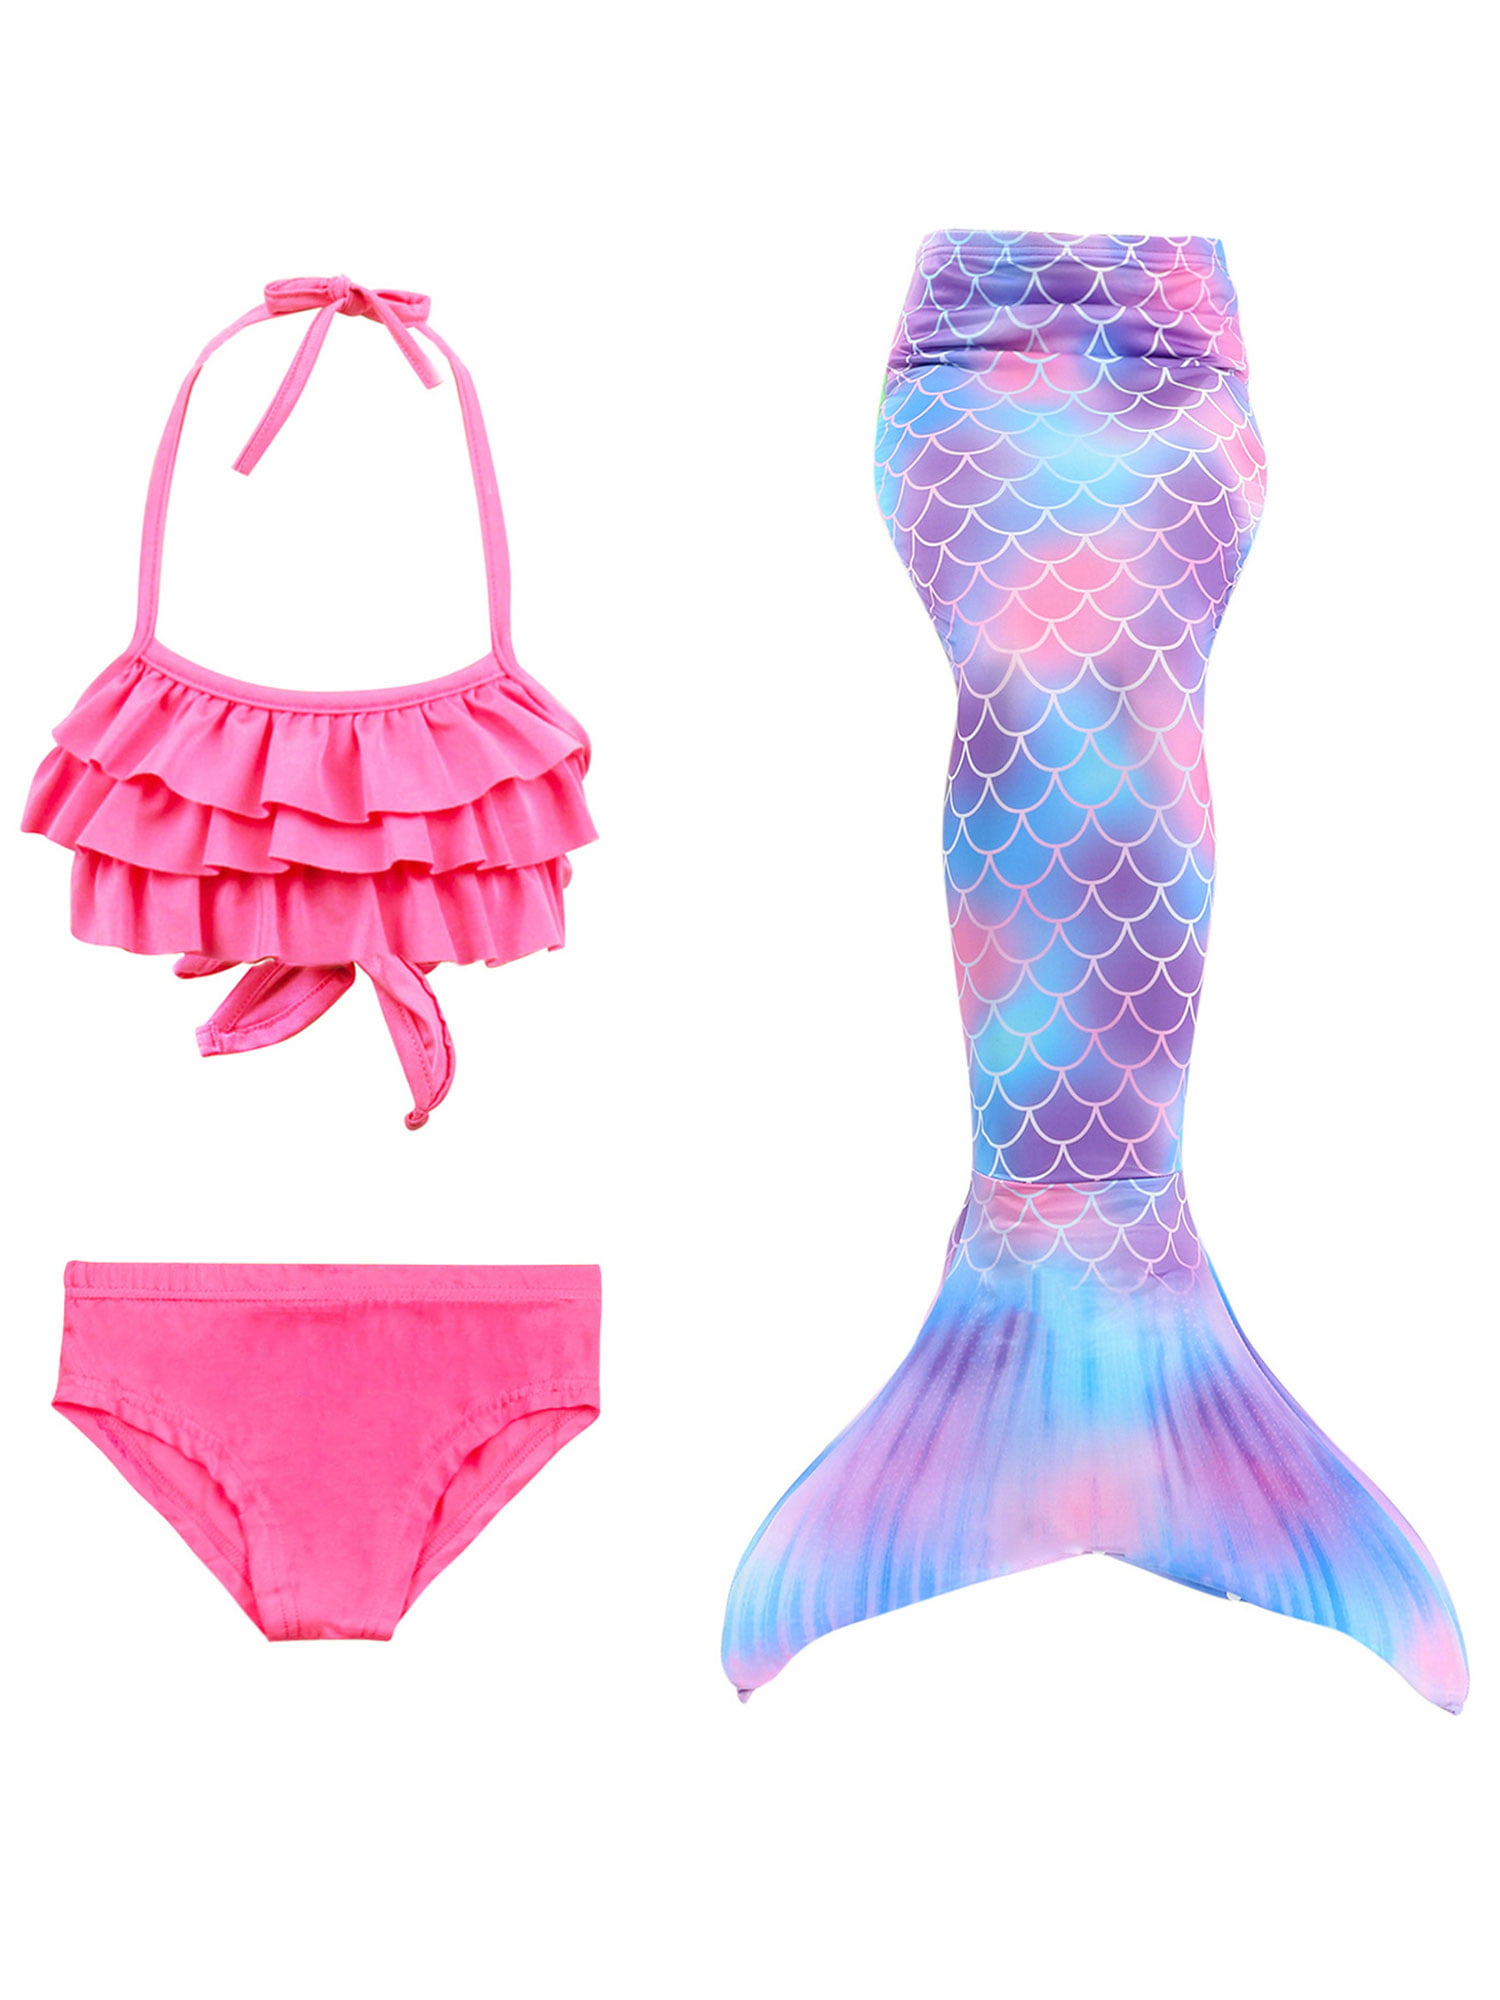 UK STOCK Mermaid Tail With Monofin Swimmable Swimming Bikini Sets For Kids Girls 